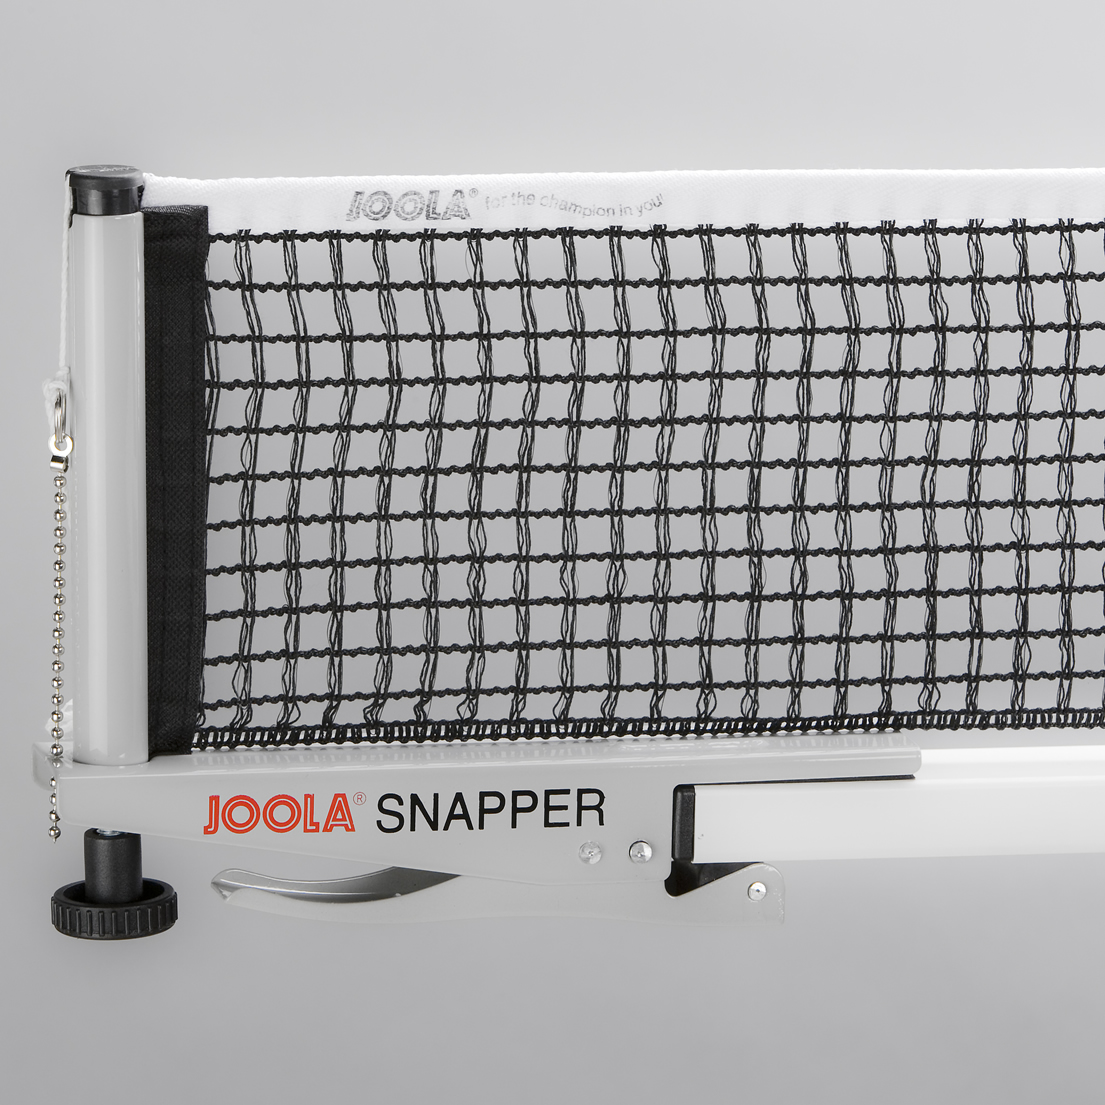 JOOLA - Snapper net and post set